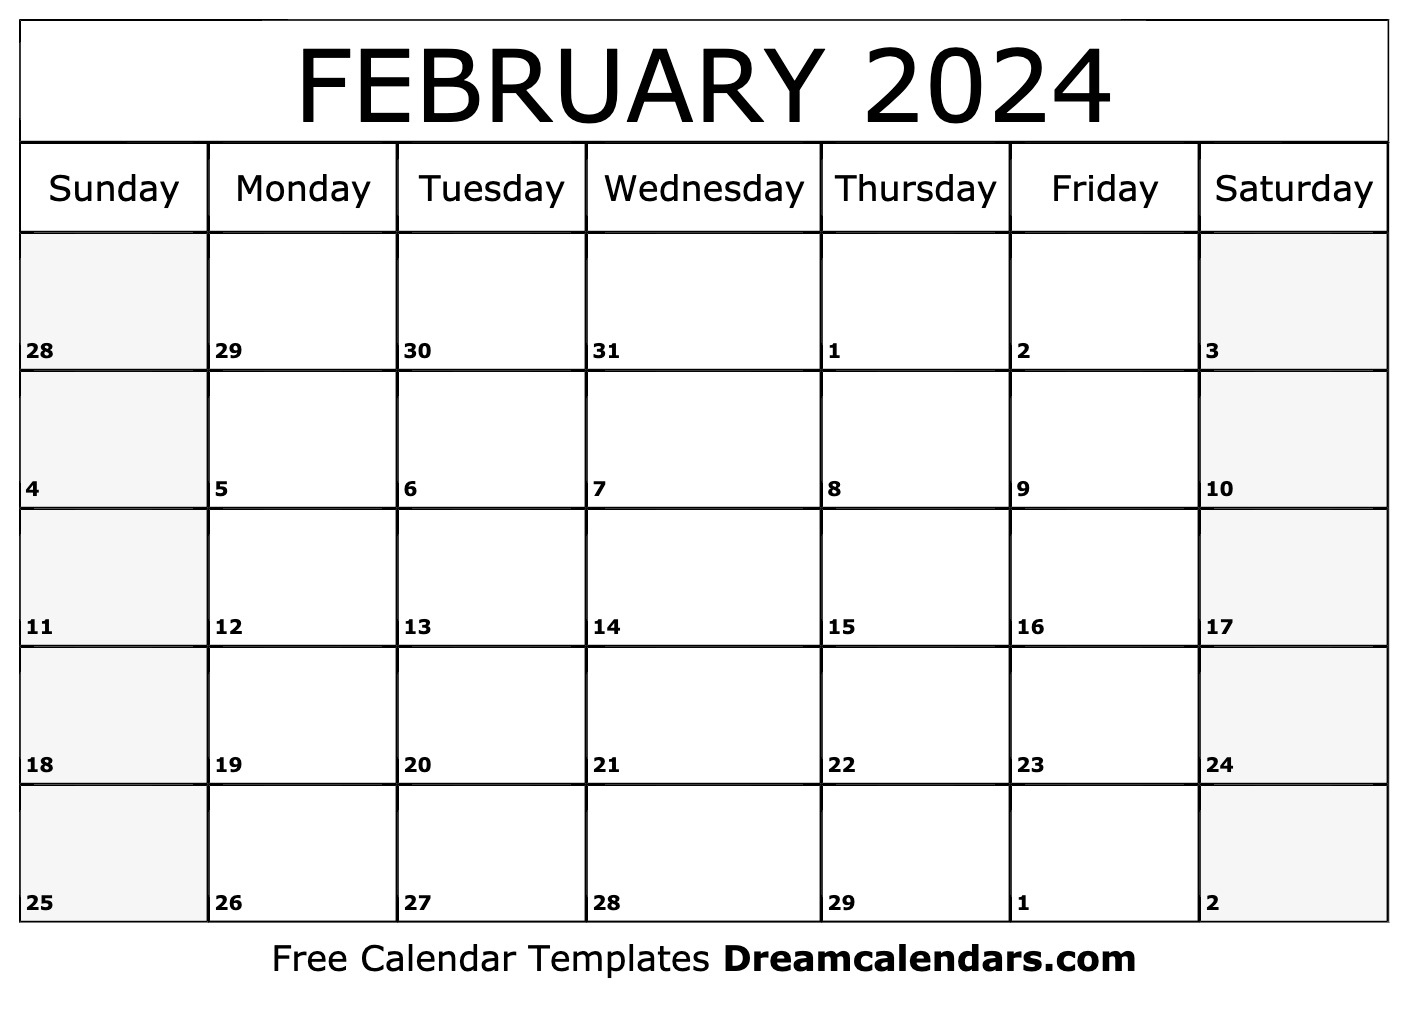 February 2024 Calendar - Free Printable 2024 Monthly Calendar With Holidays February